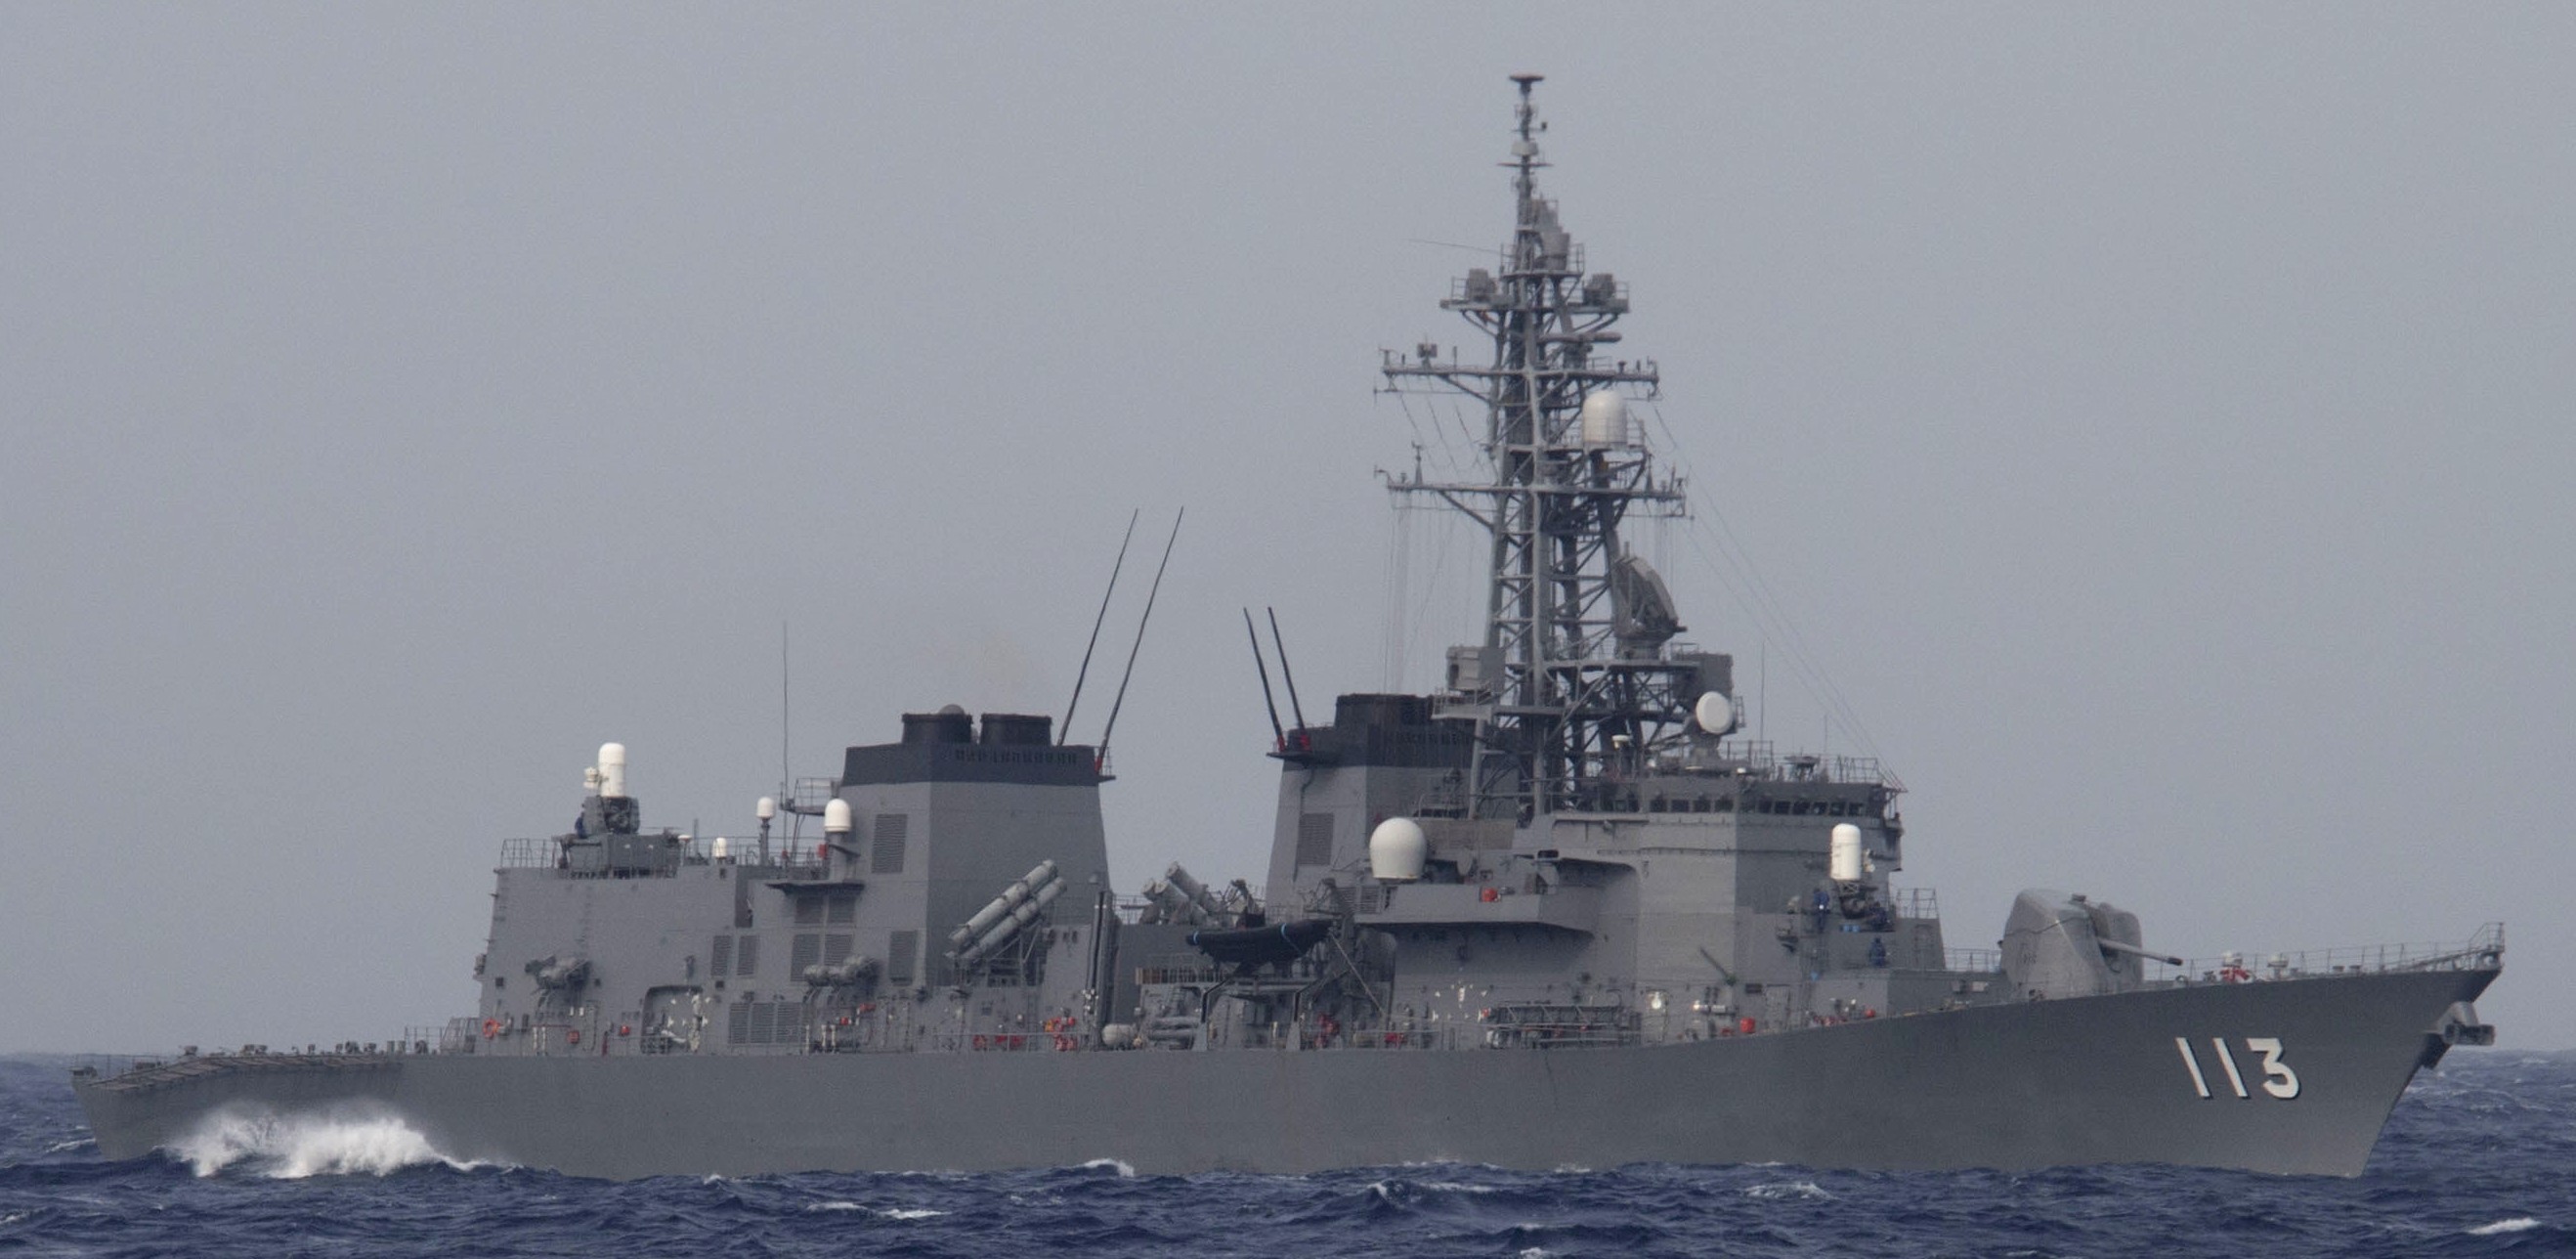 dd-113 js sazanami takanami class destroyer japan maritime self defense force jmsdf 19